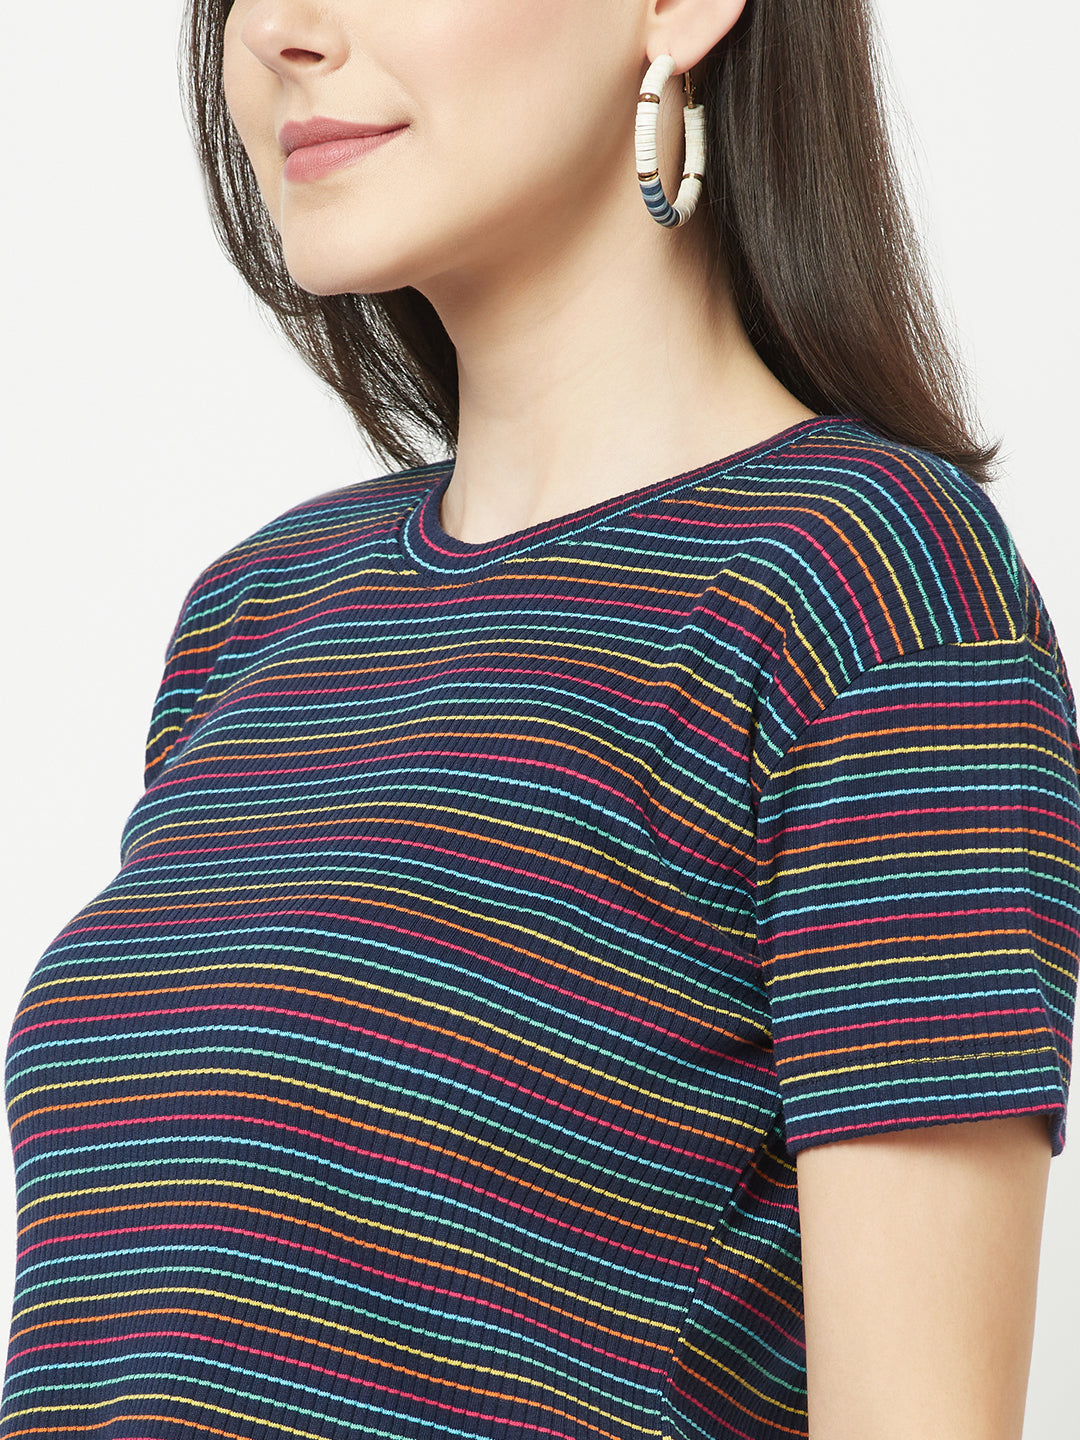  Dark Rainbow Striped T-Shirt